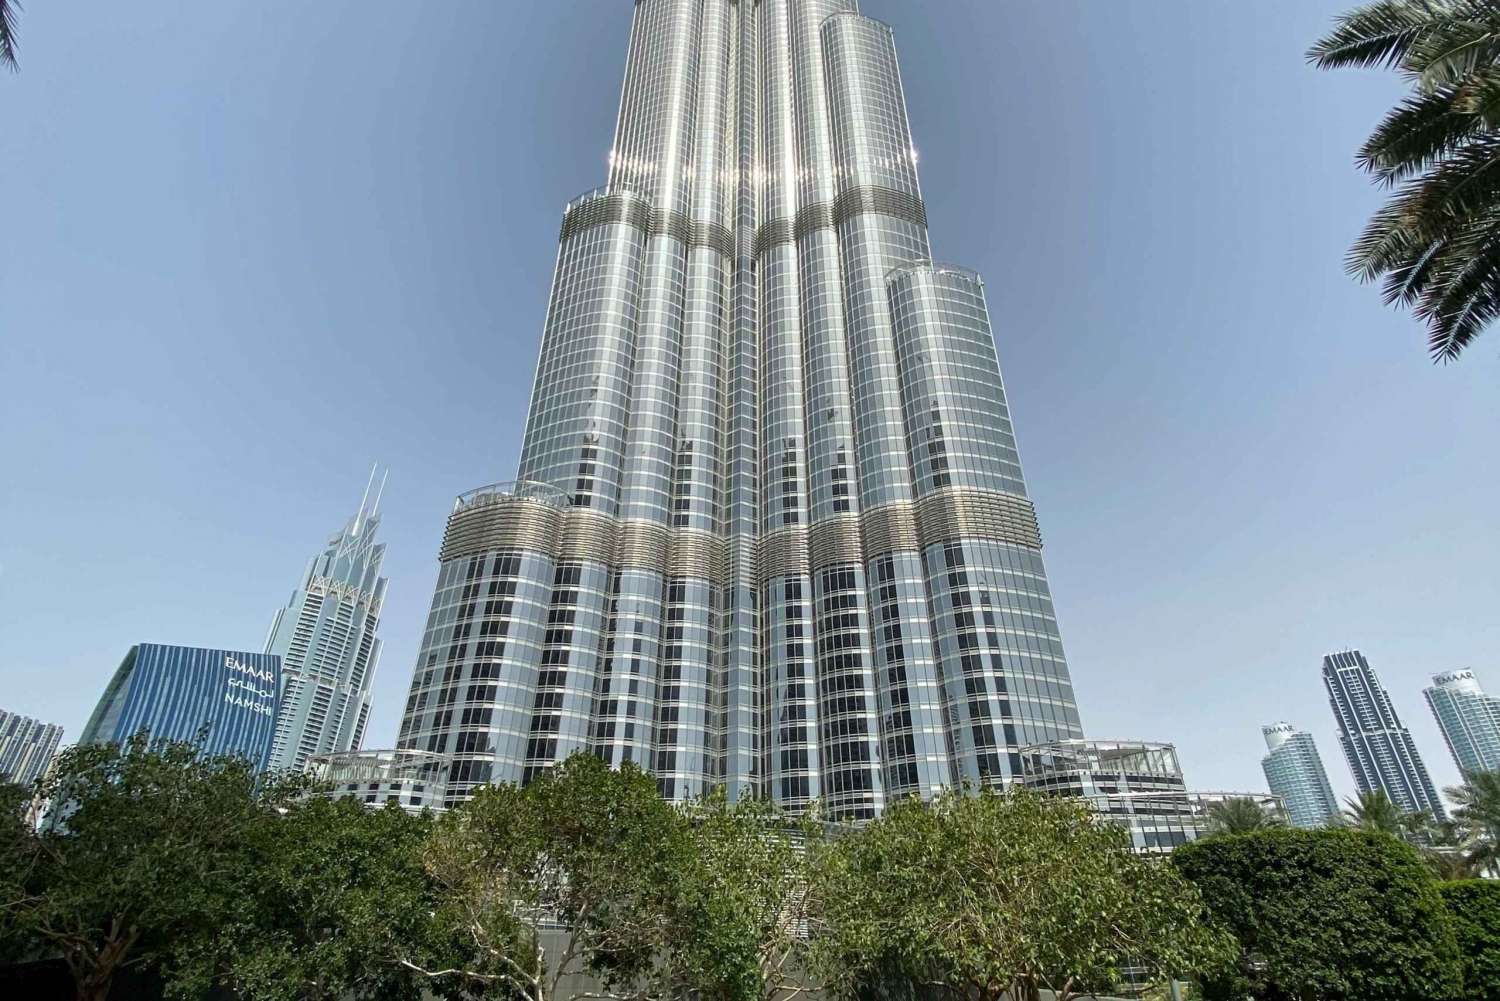 Dubai City Tour - Full Day Private With Burj Khalifa Entry